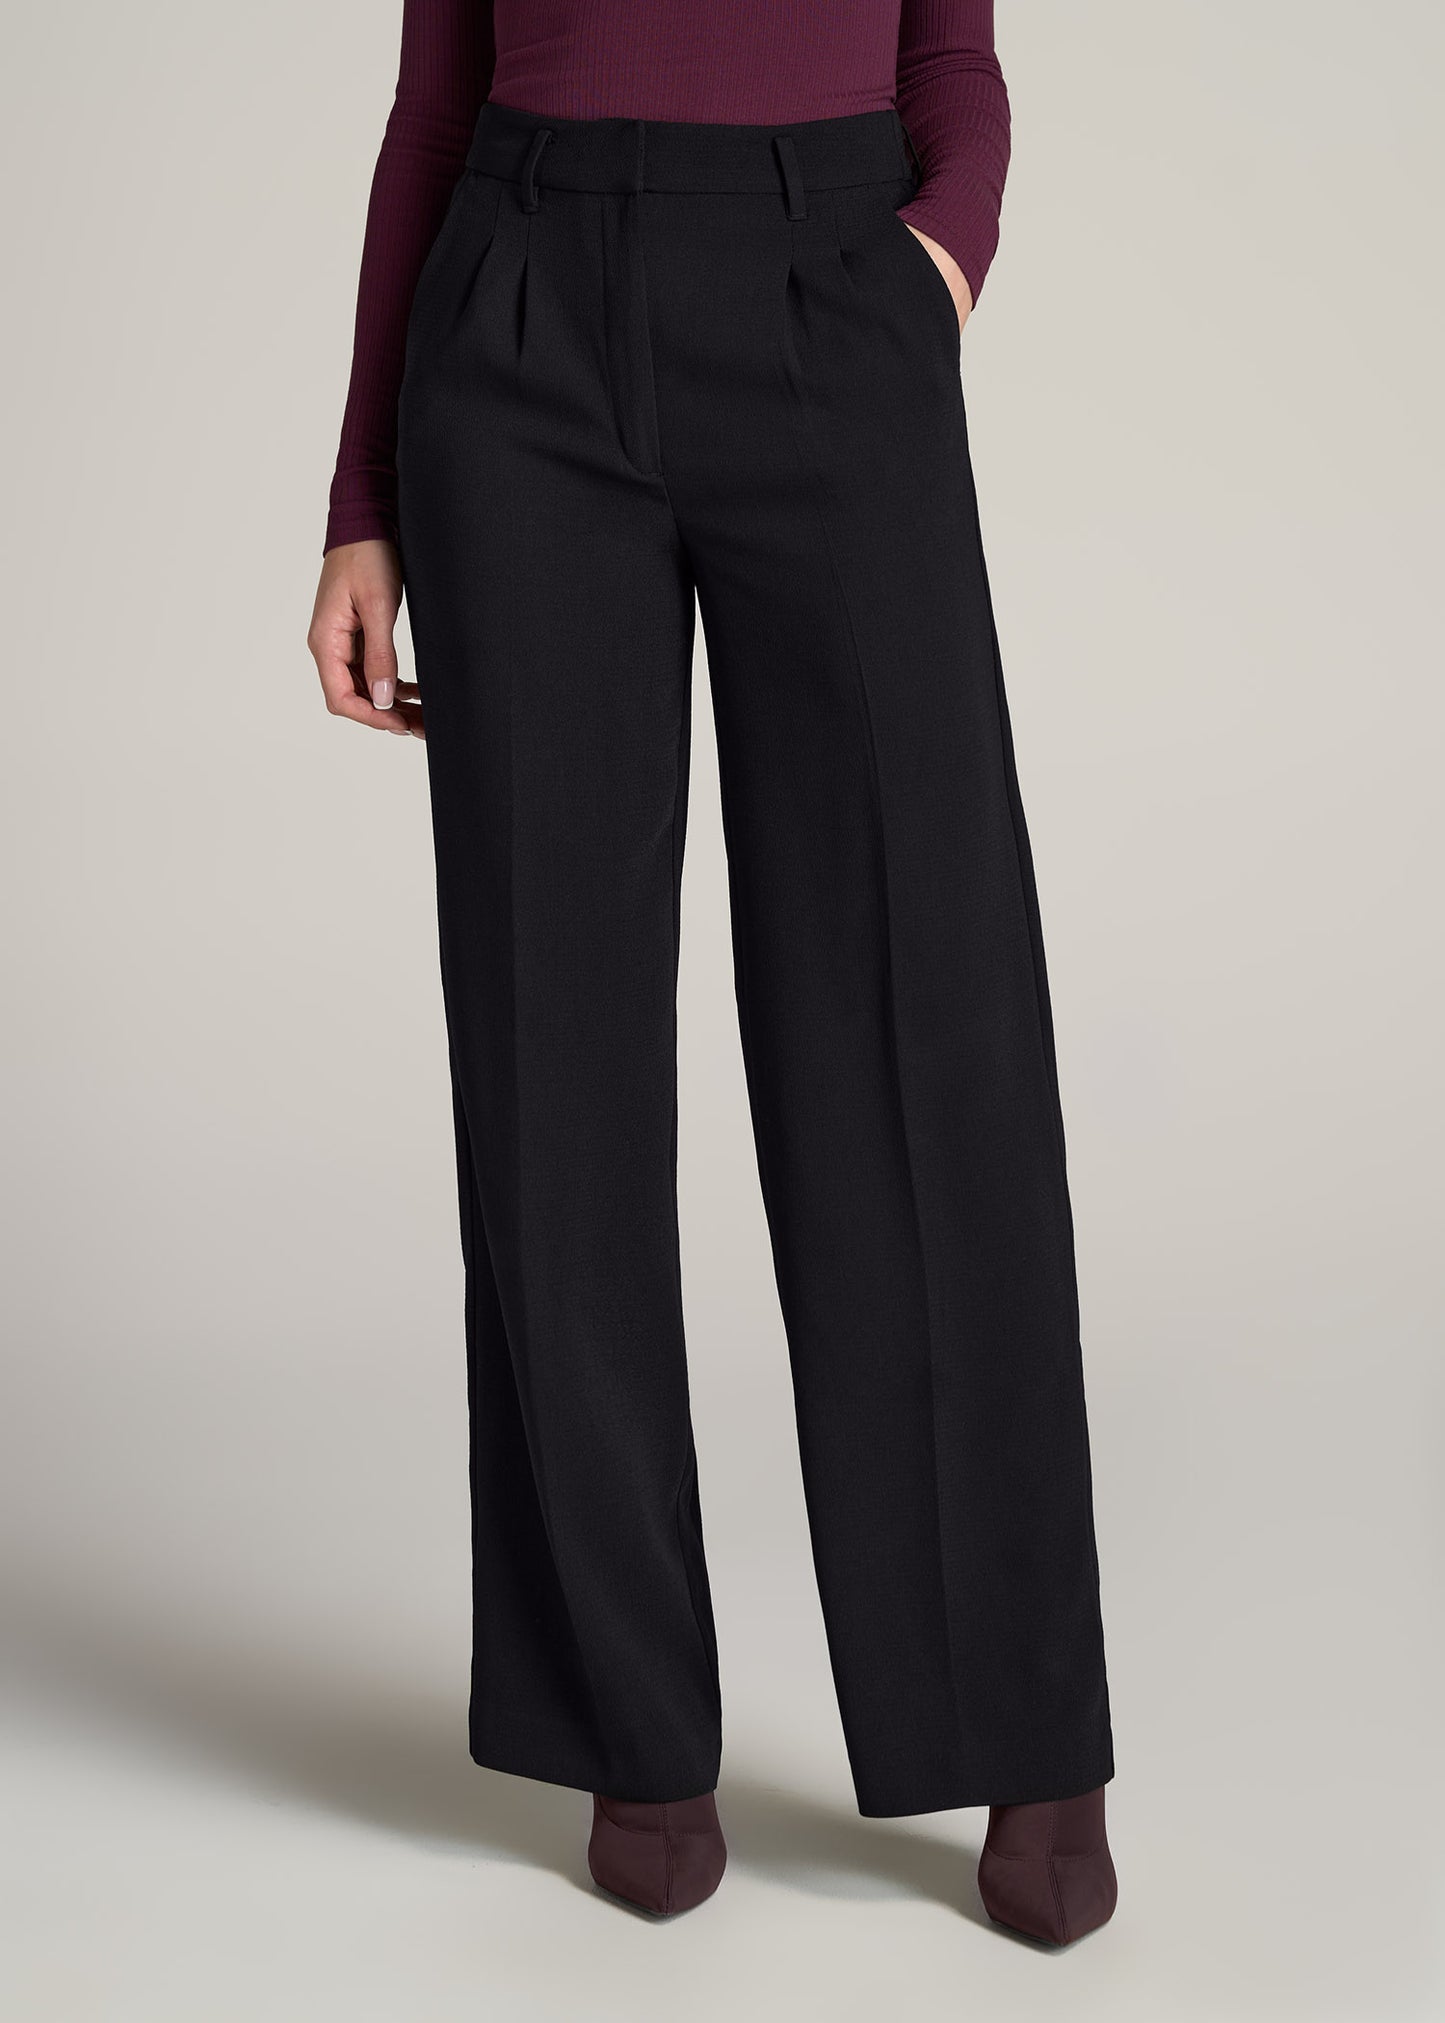       American-Tall-Women-Pleated-Dress-Pants-Black-front